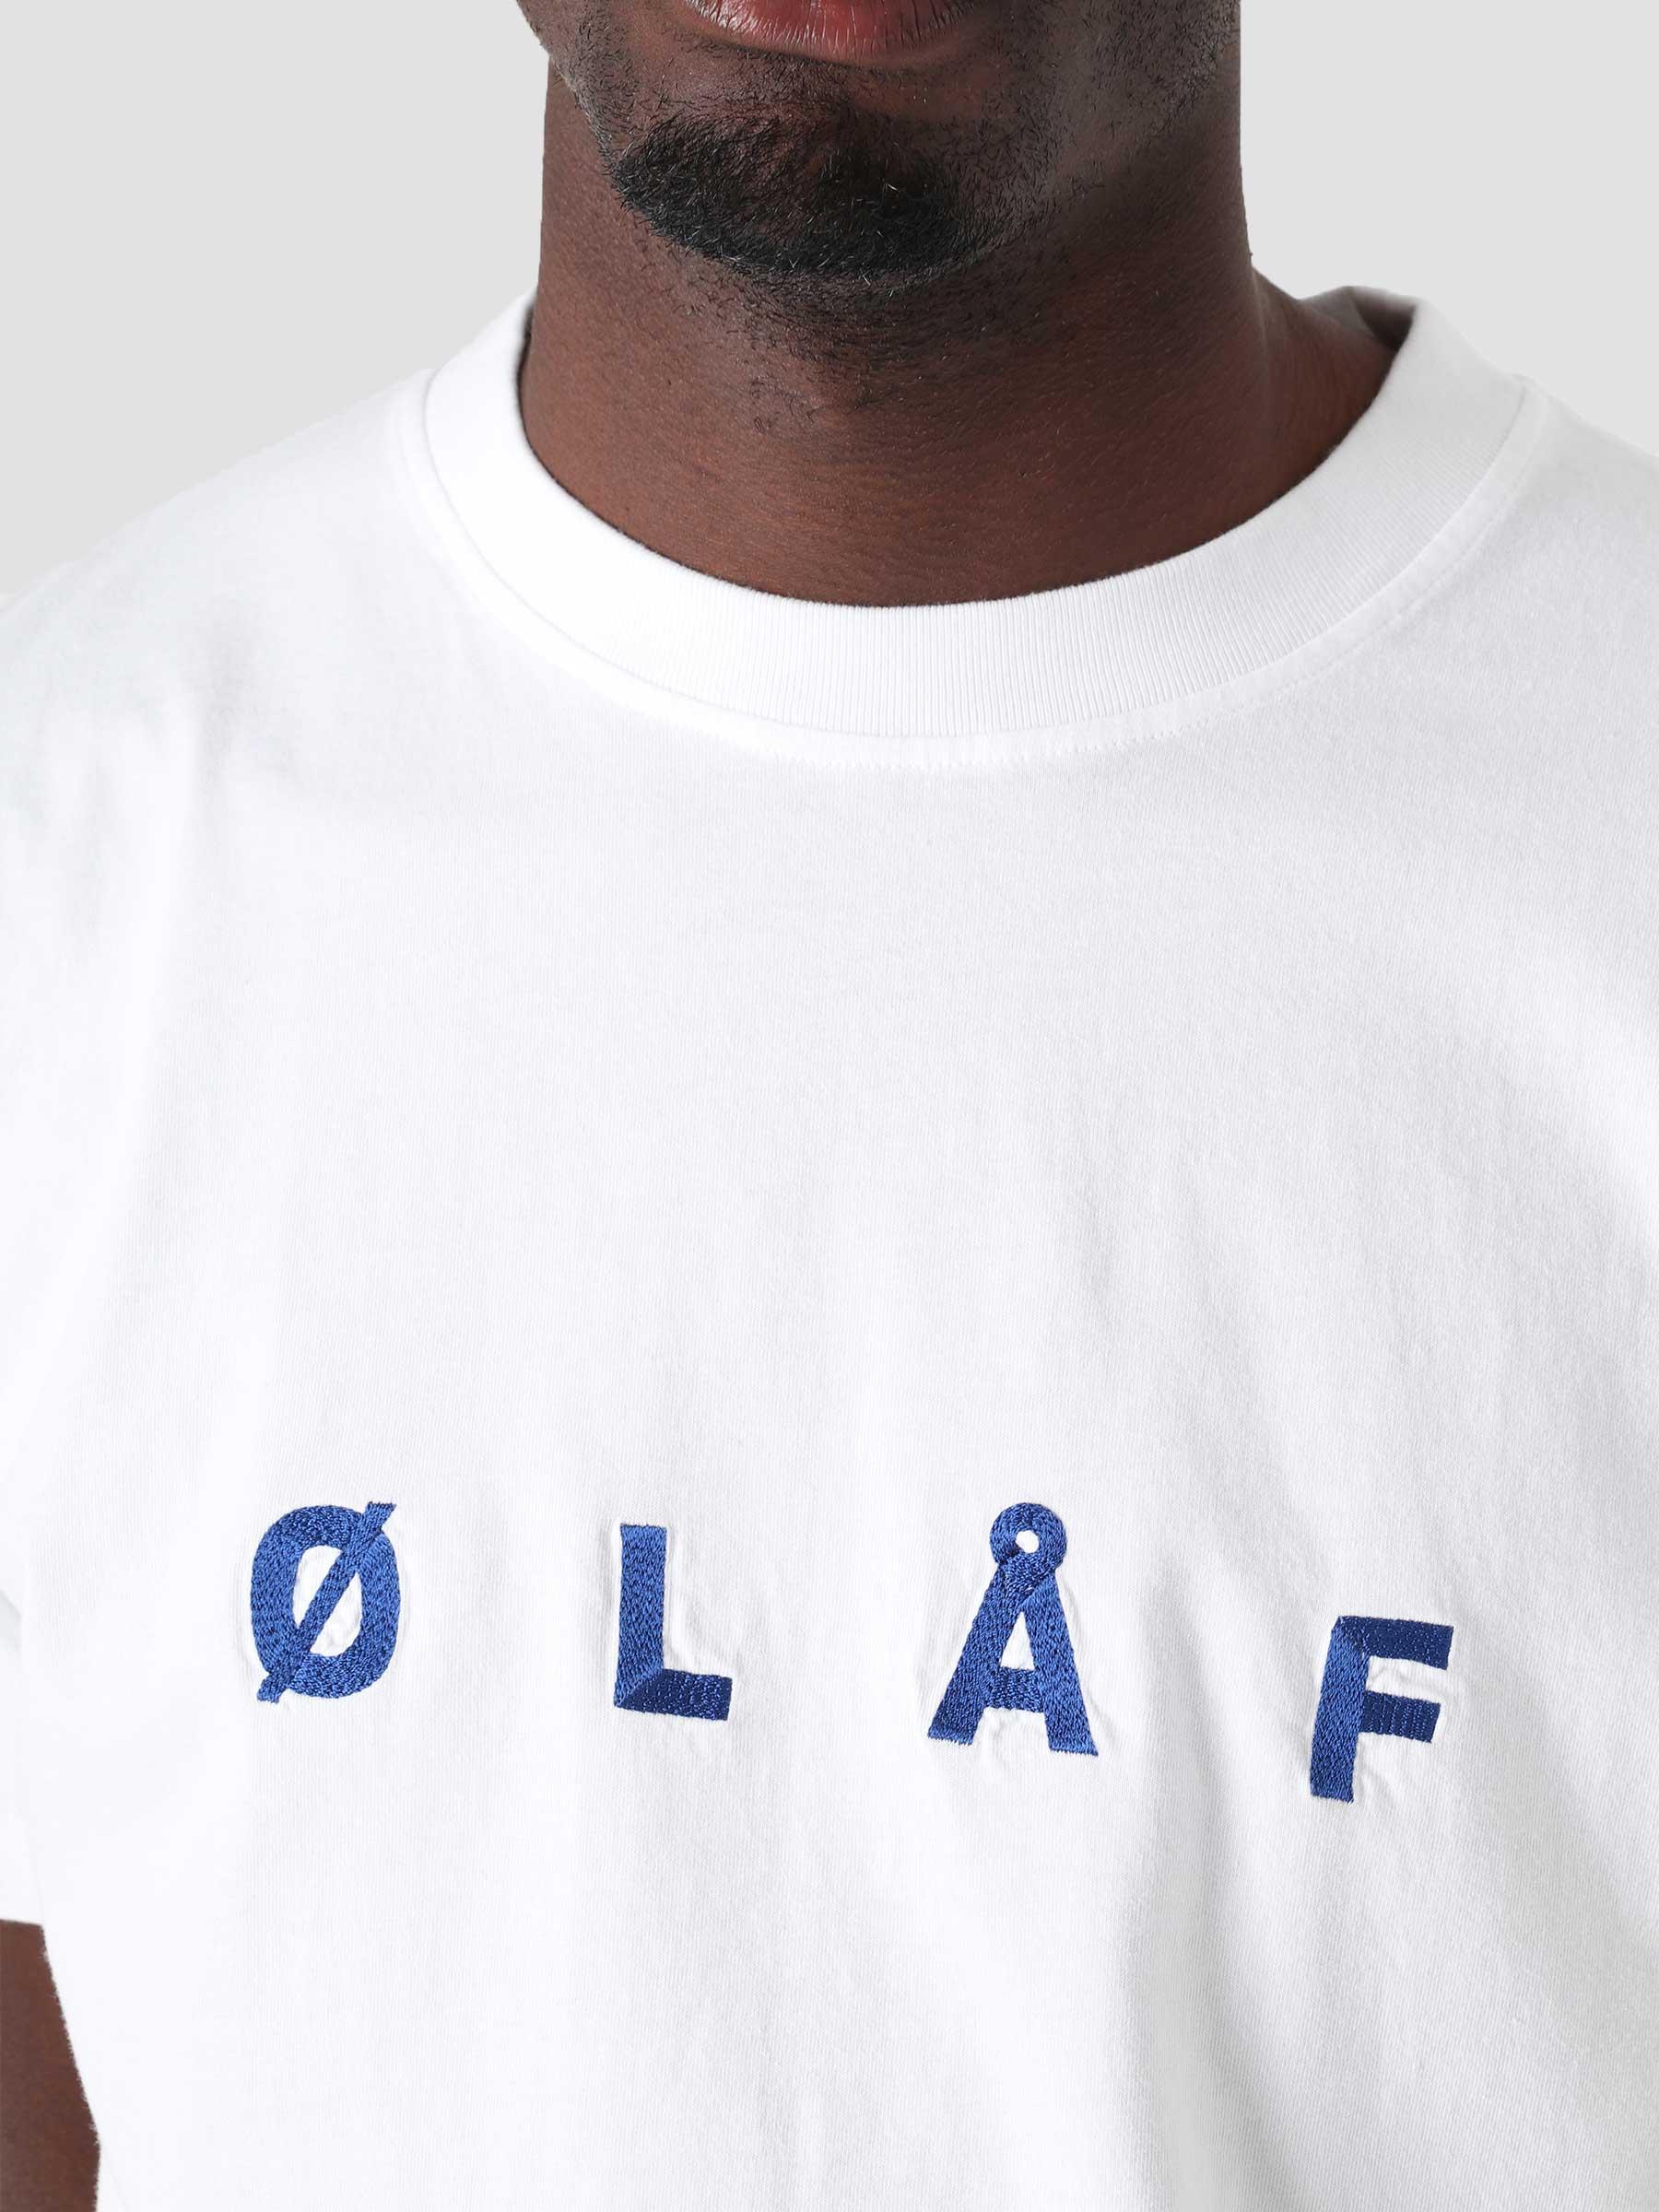 OLAF Chainstitch T-Shirt White